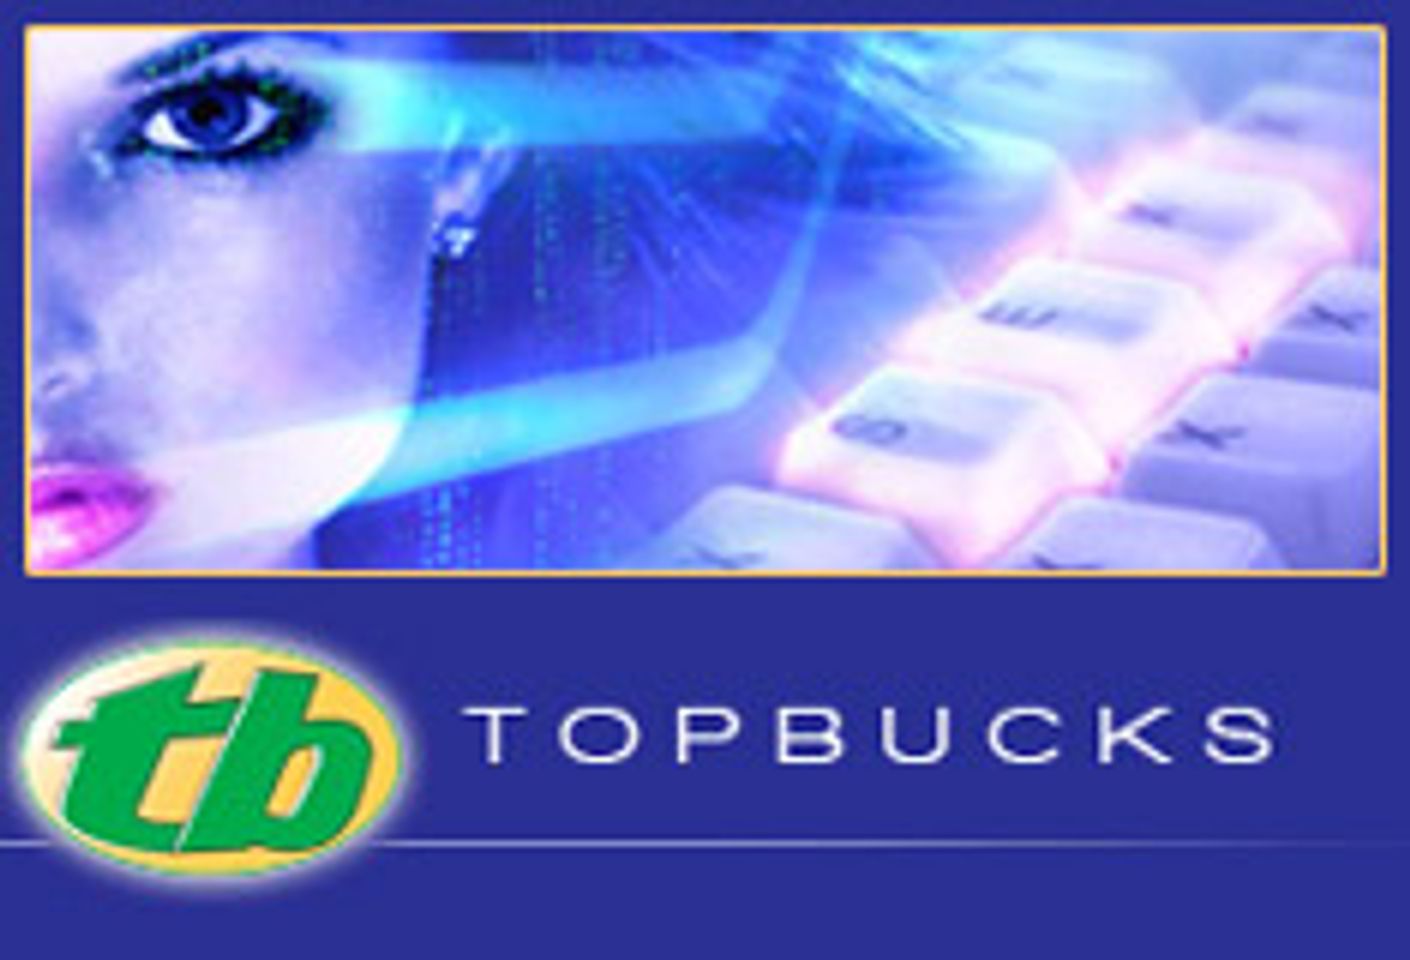 Company Profile: TopBucks